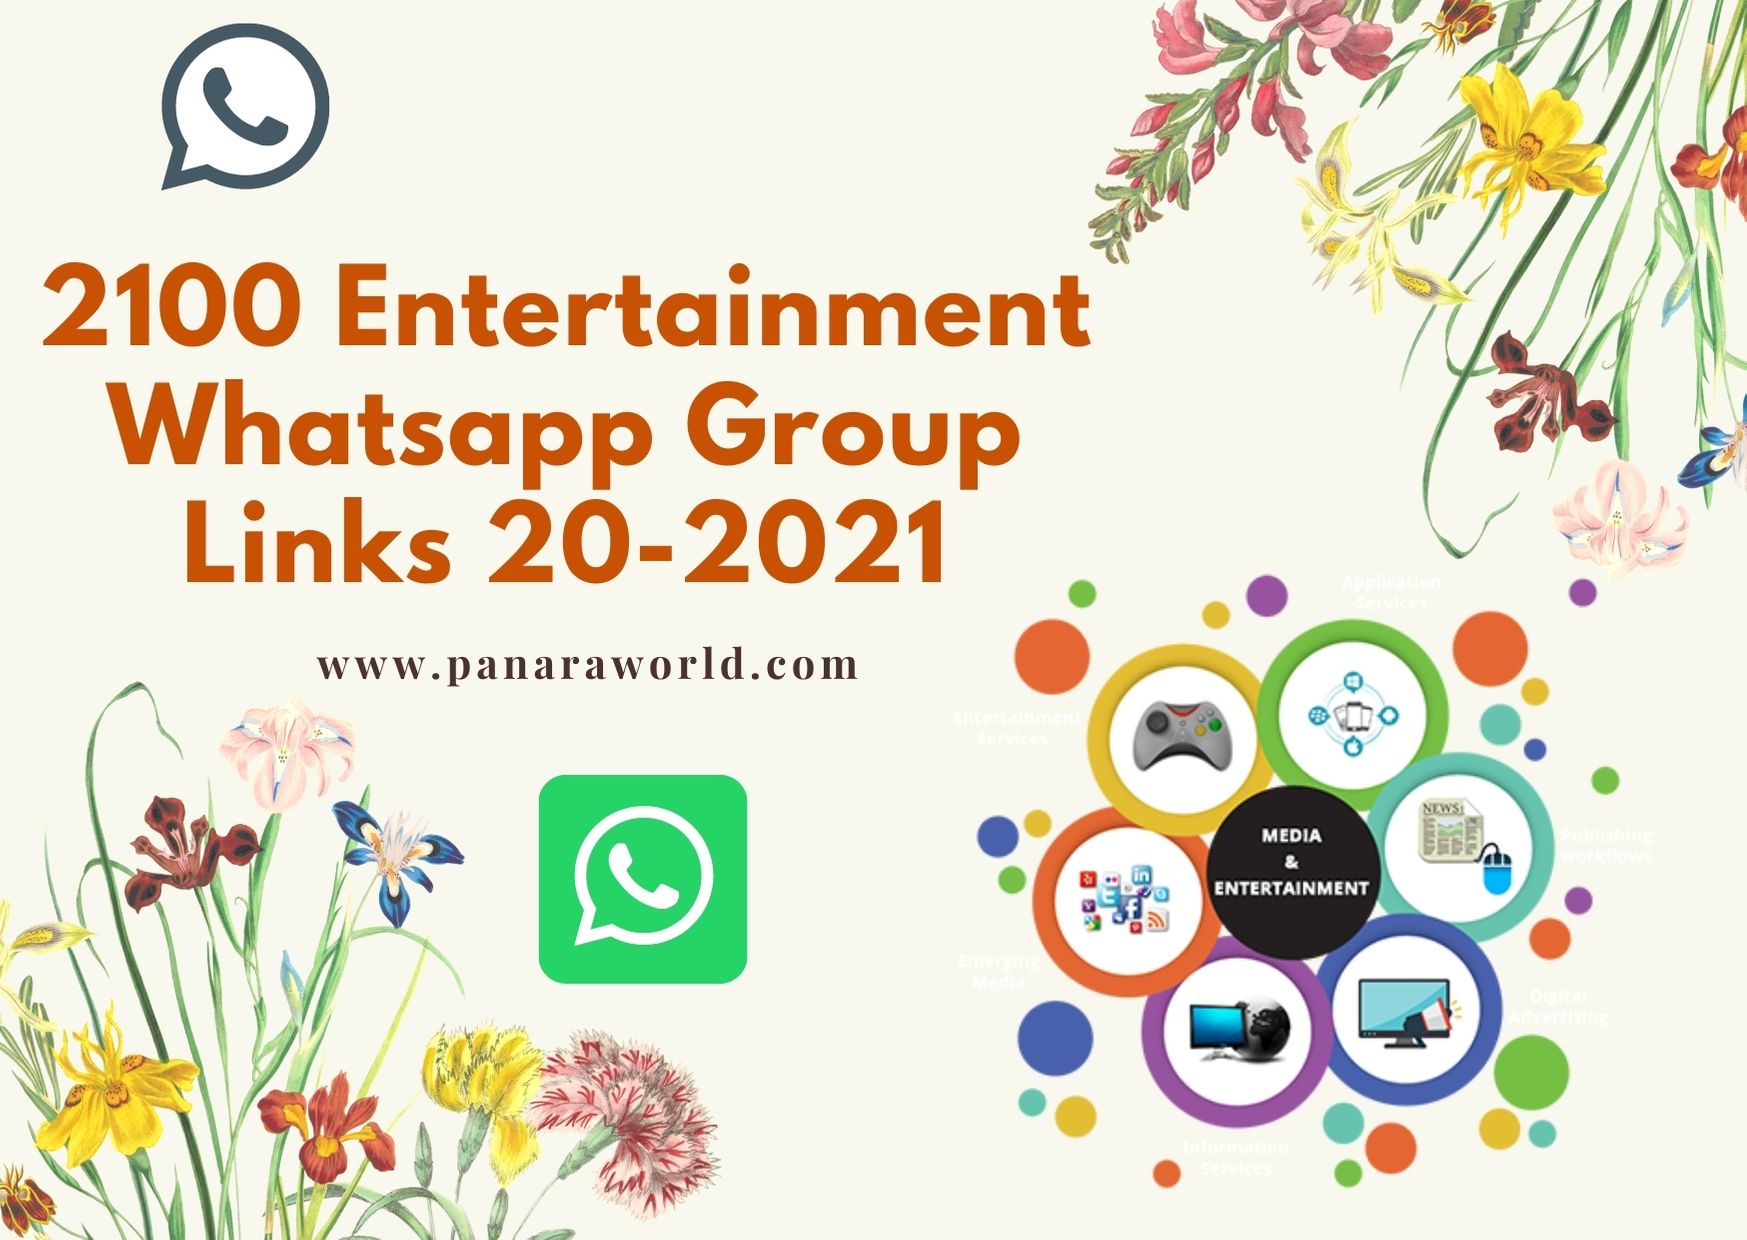 Entertainment Whatsapp Group Links